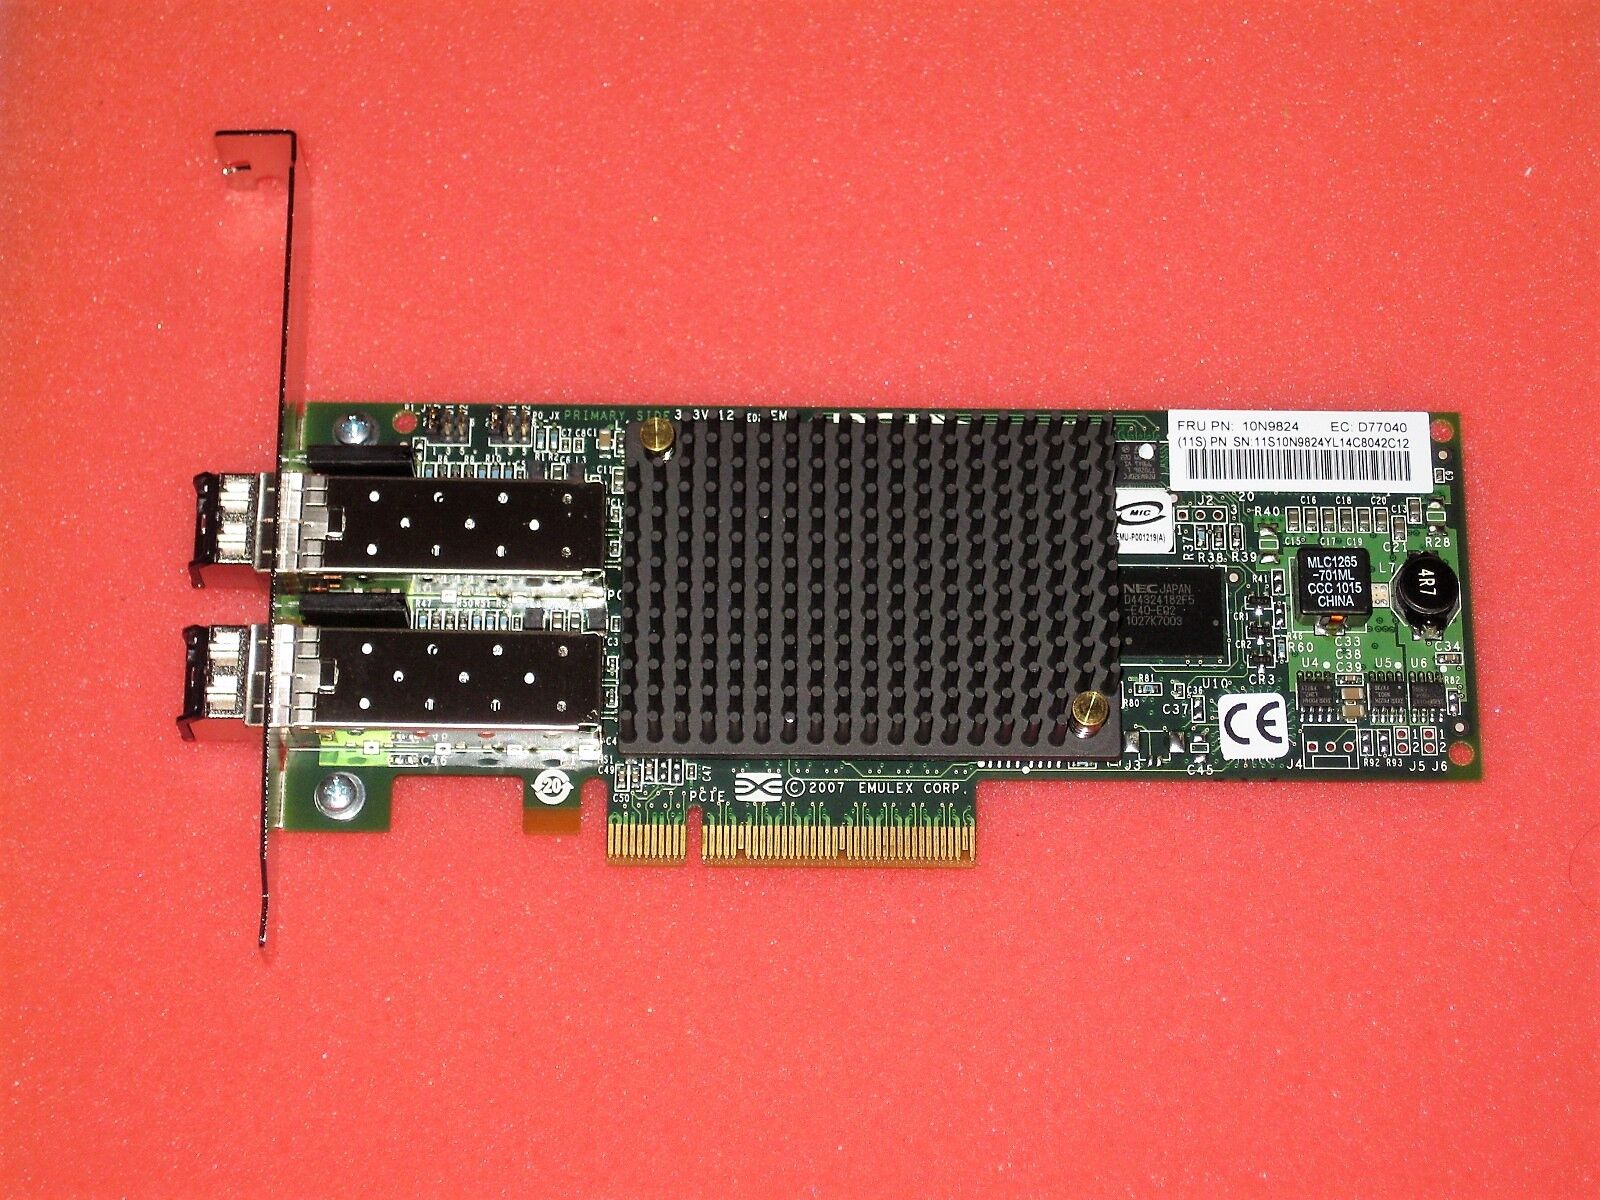 10N9824 00E0806 IBM 577D 5735 LightPulse 8GB DualPorts PCI-E Adapter HBA w/ SFP+